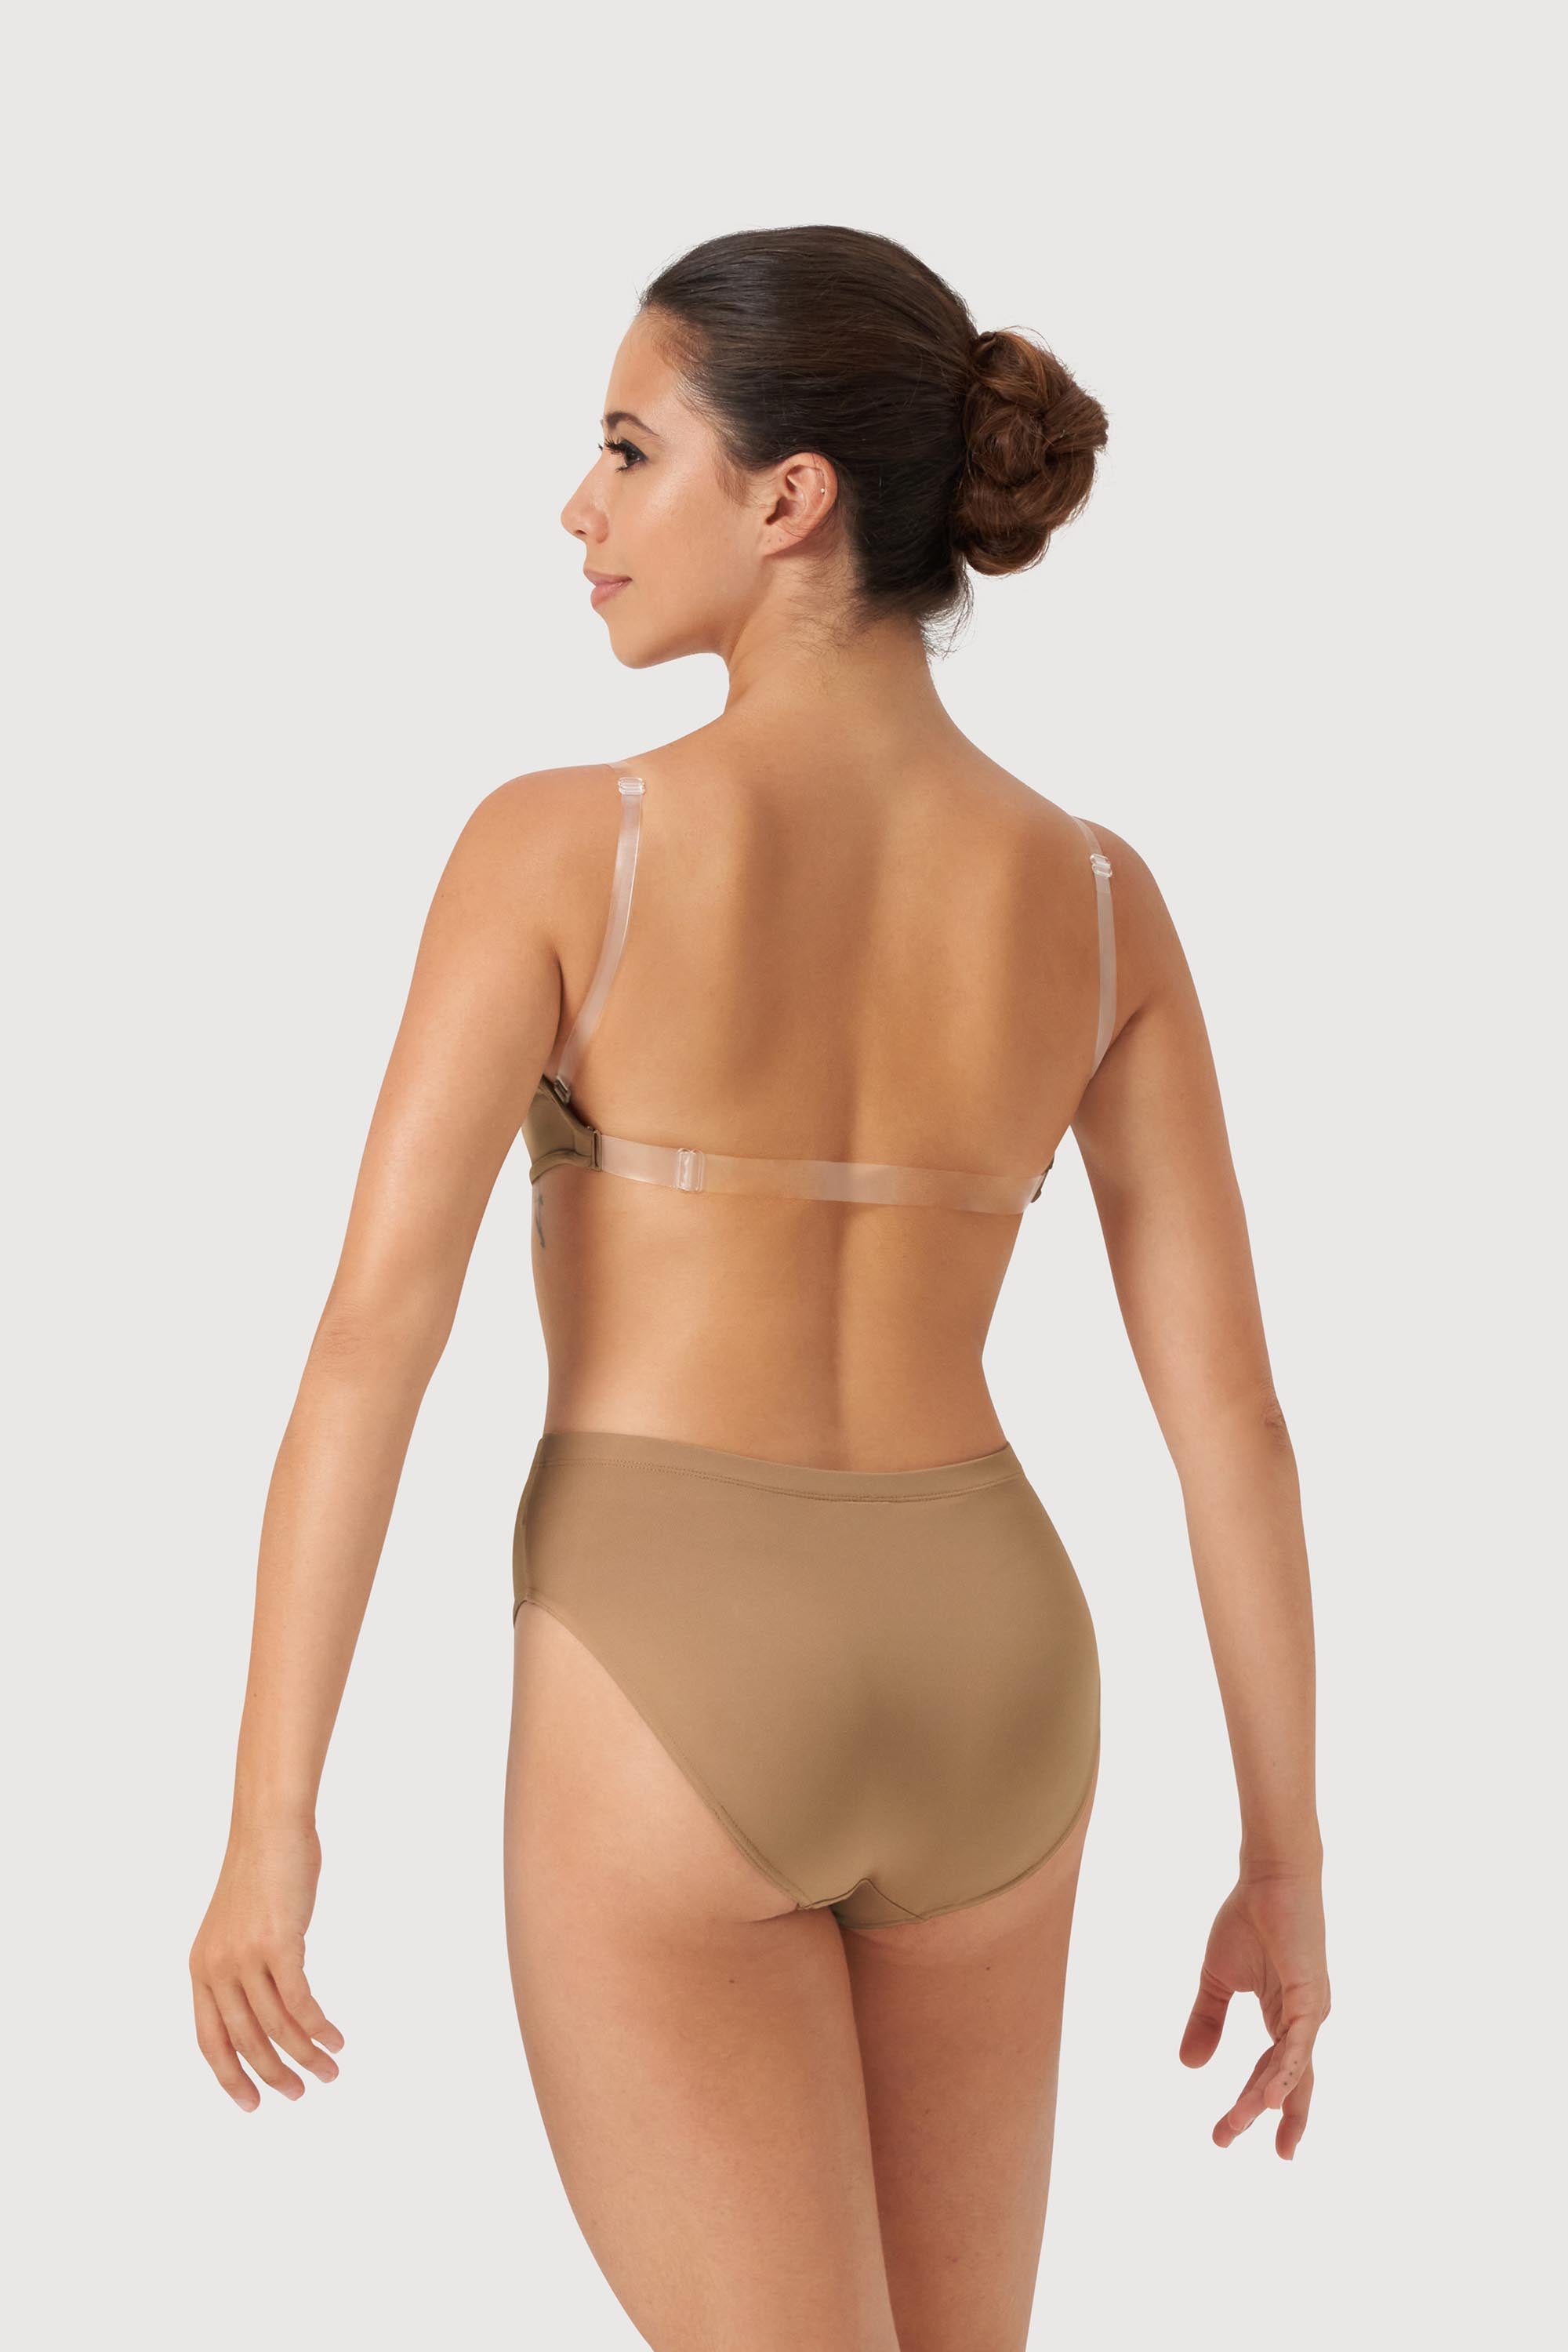 Dance Undergarments Canada: Shop Clear Back Bras, Bodyliners